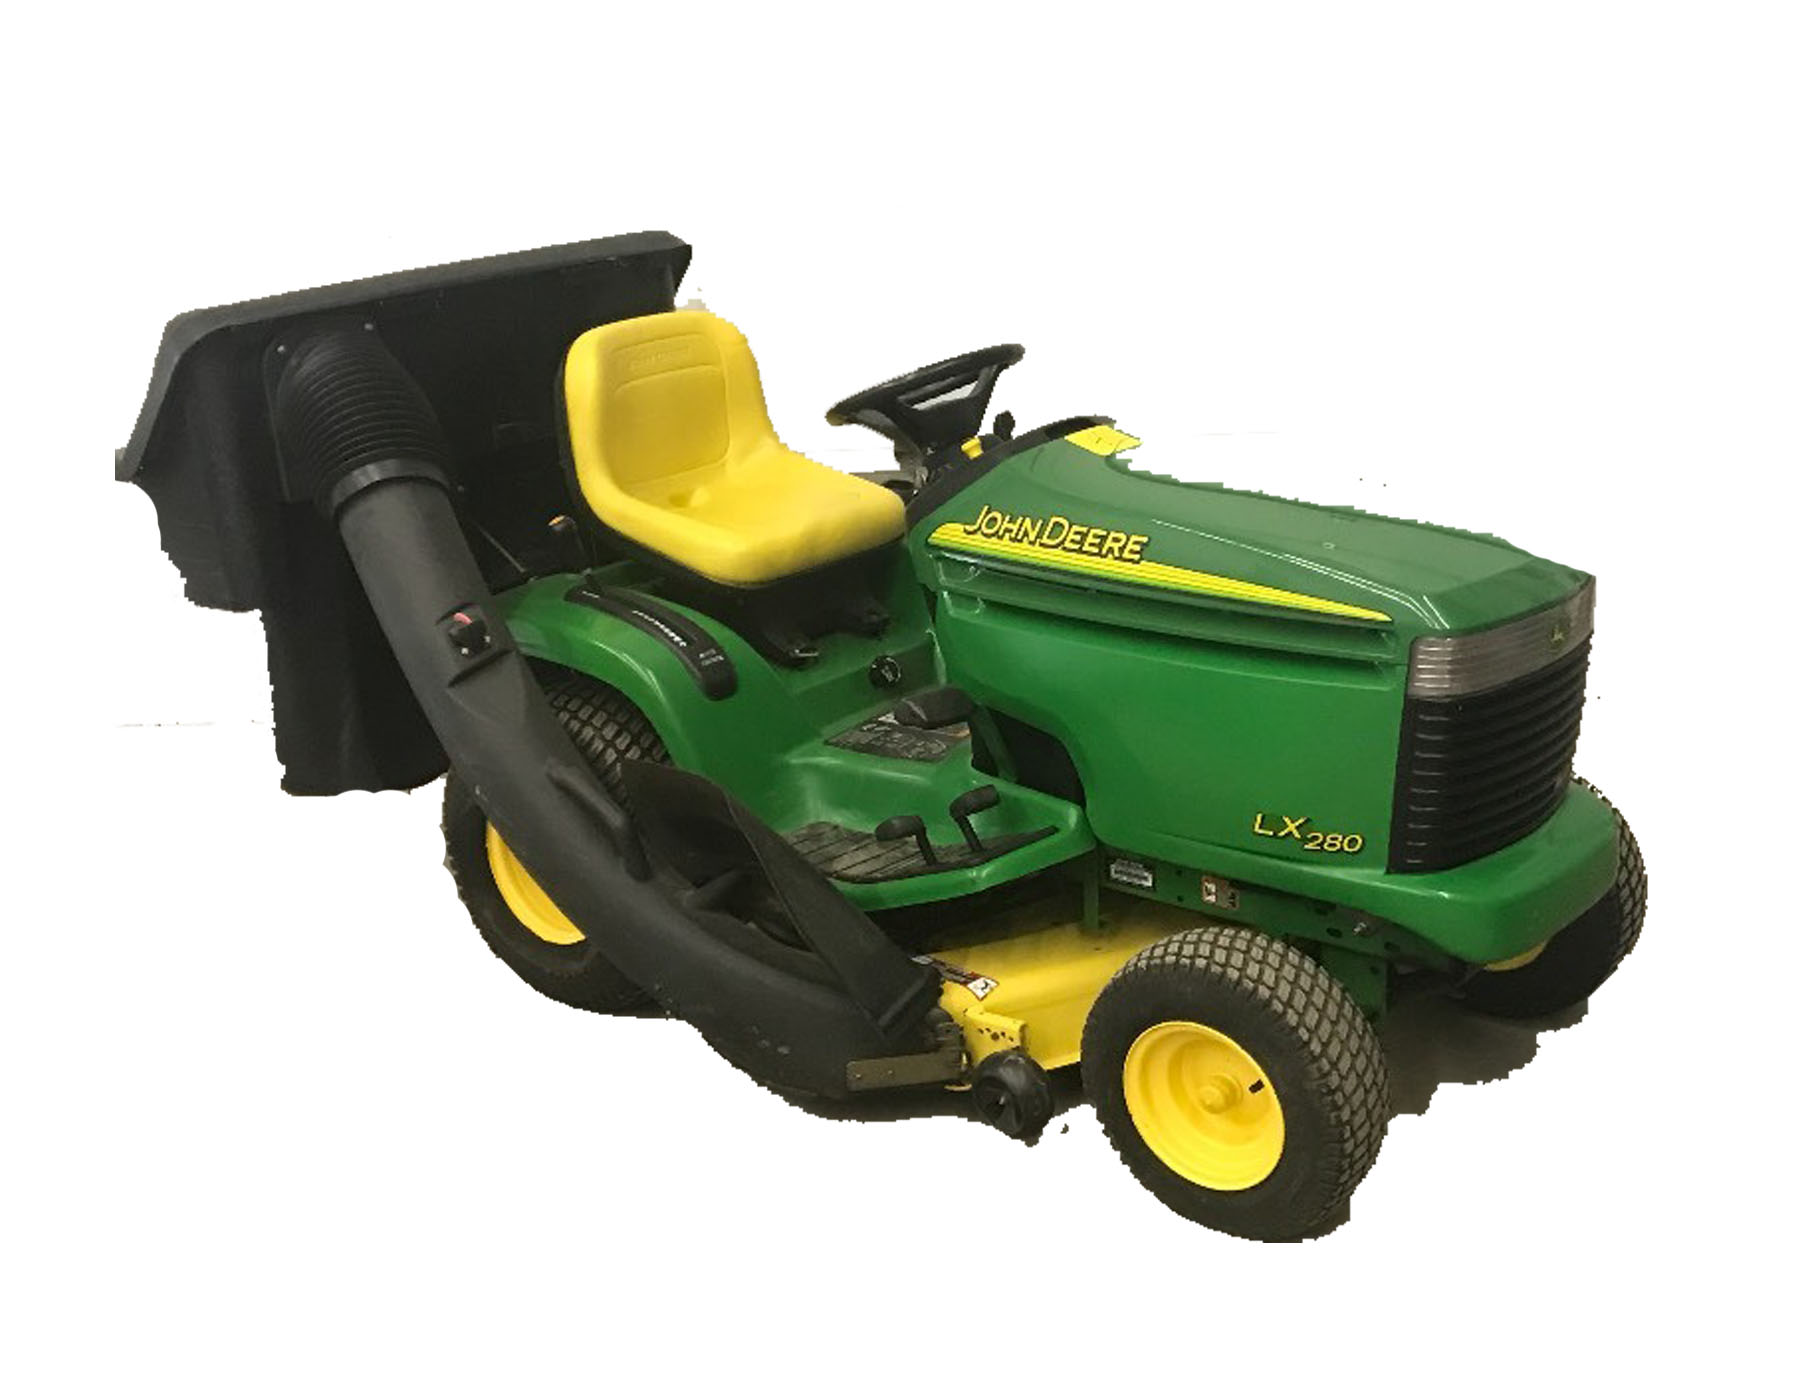 John Deere LX280 Lawn Tractor Price Specs